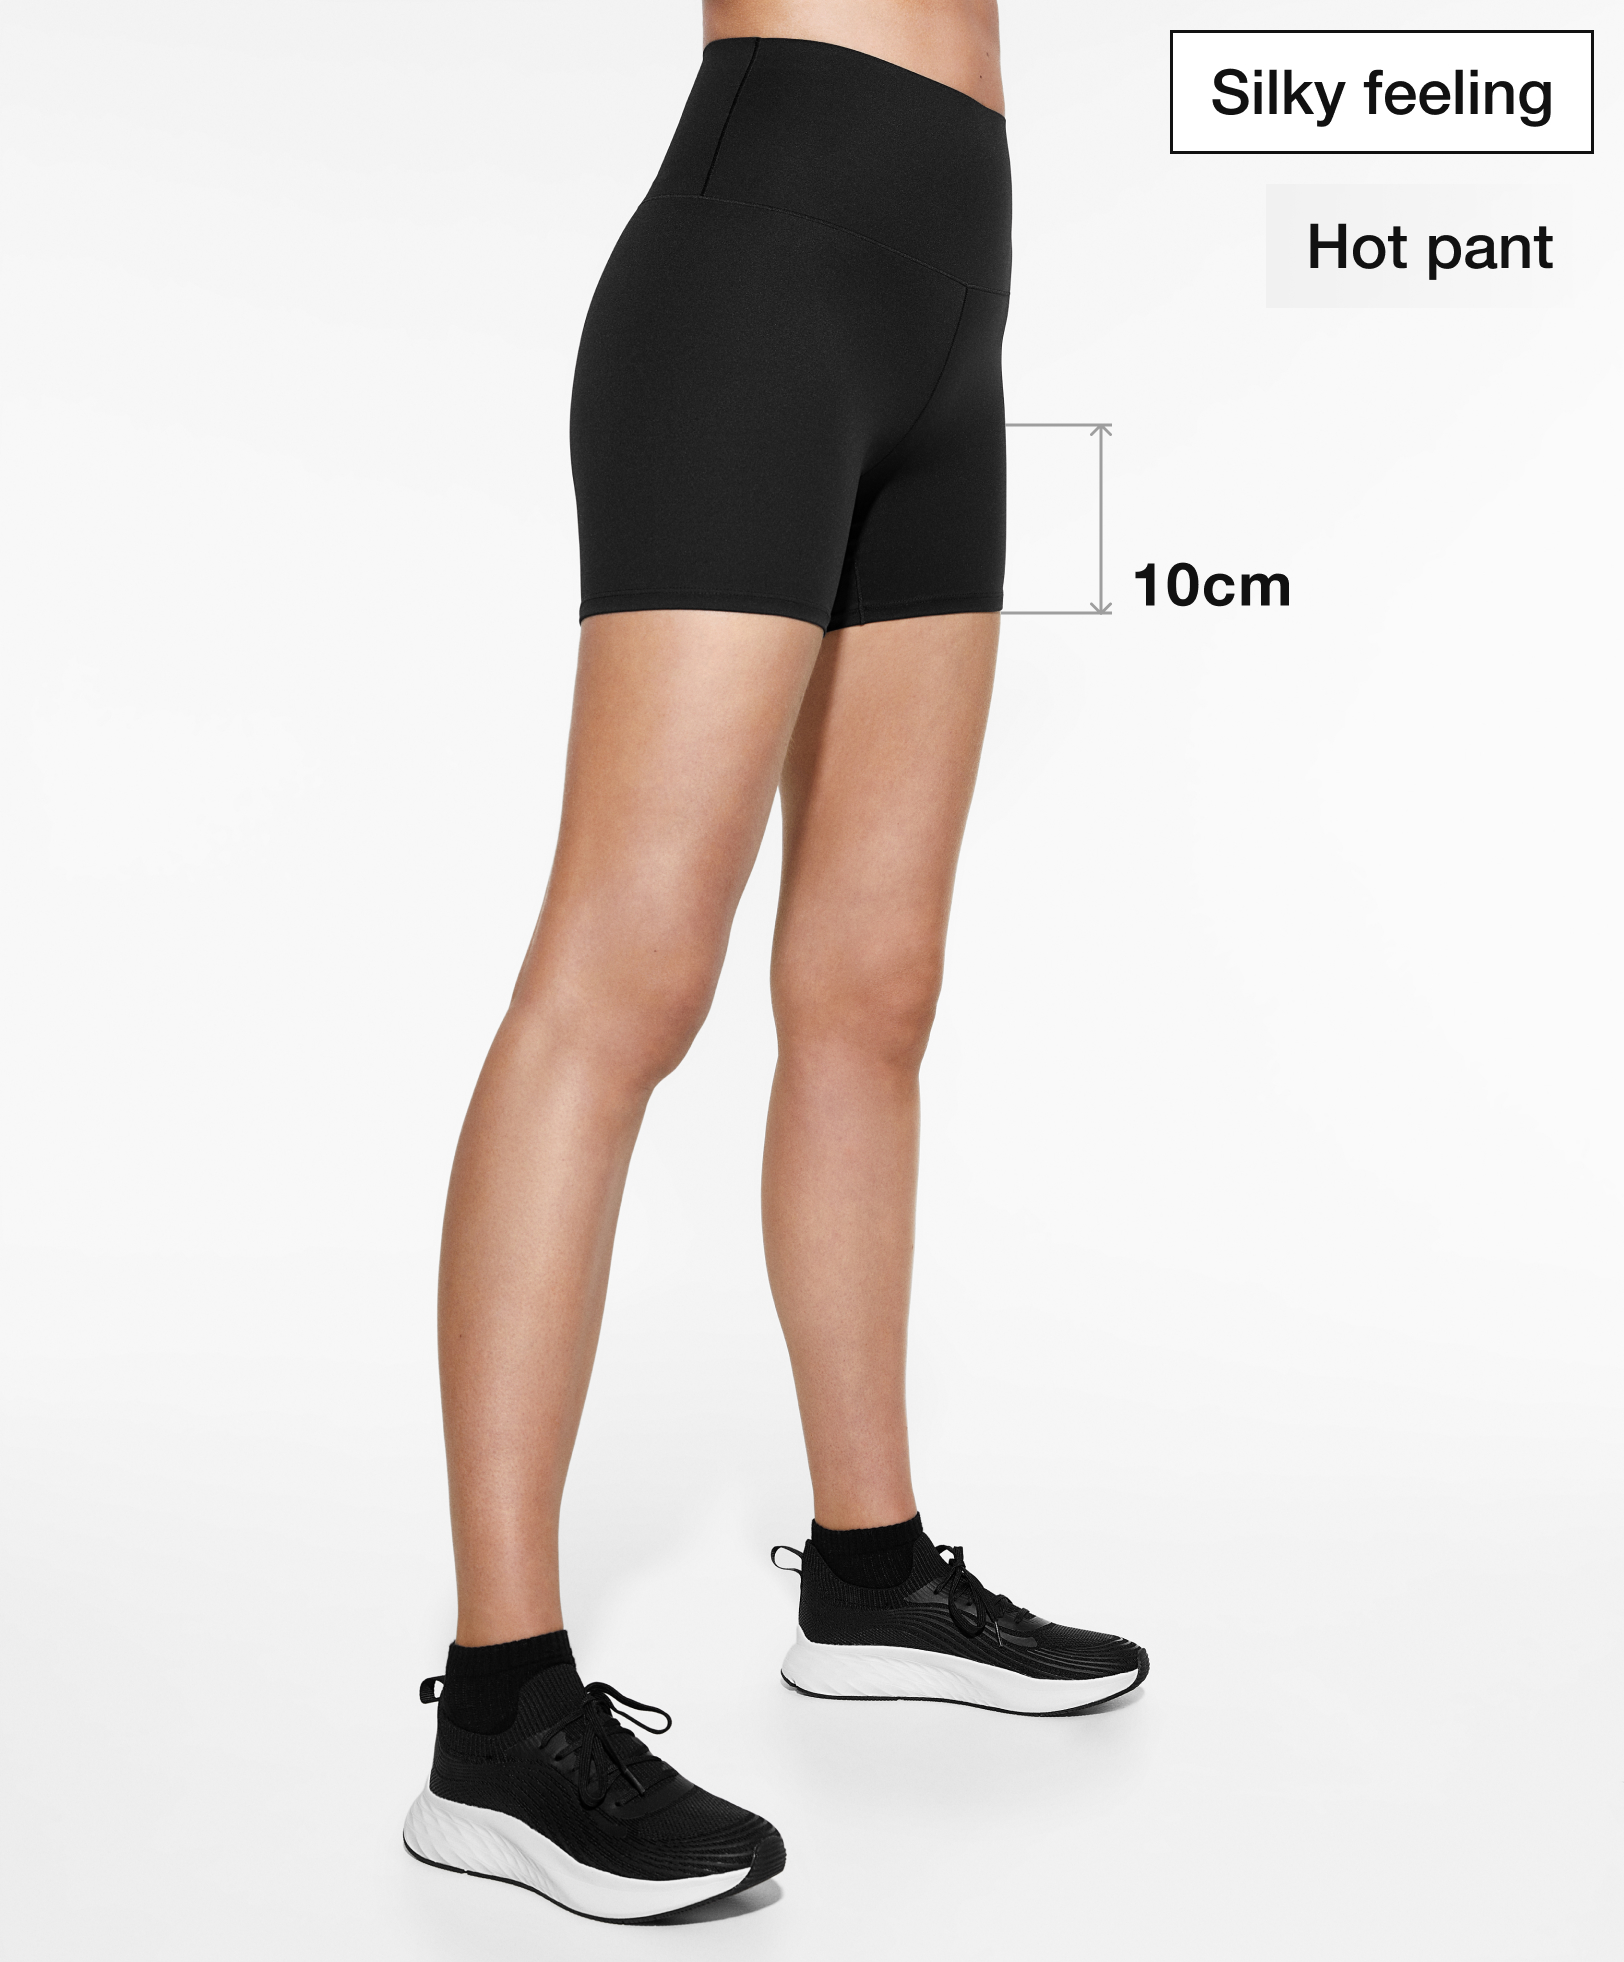 Perfect-adapt high-rise 10cm hot pant